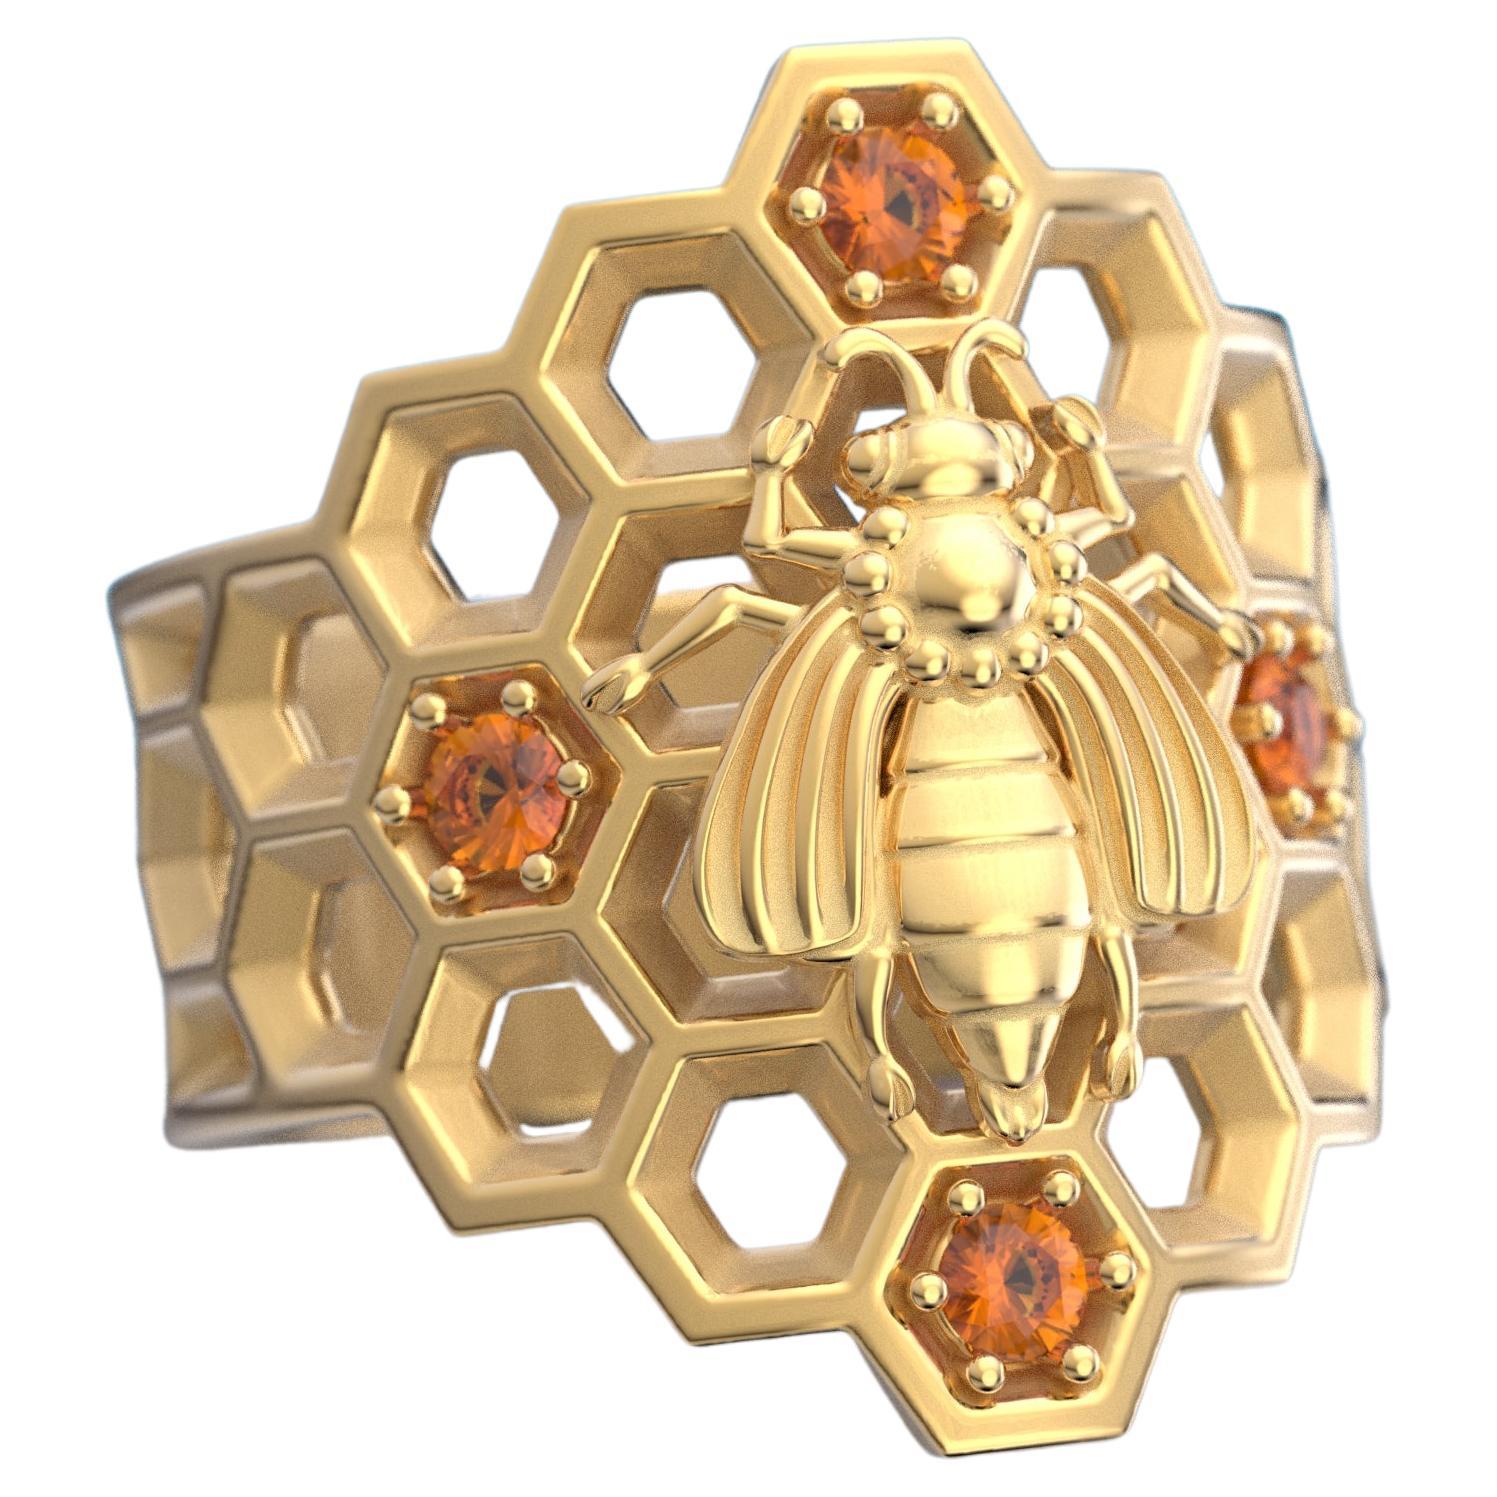  Honeycomb Bee Ring in 18k Solid Gold with natural Orange Spessartite Garnet